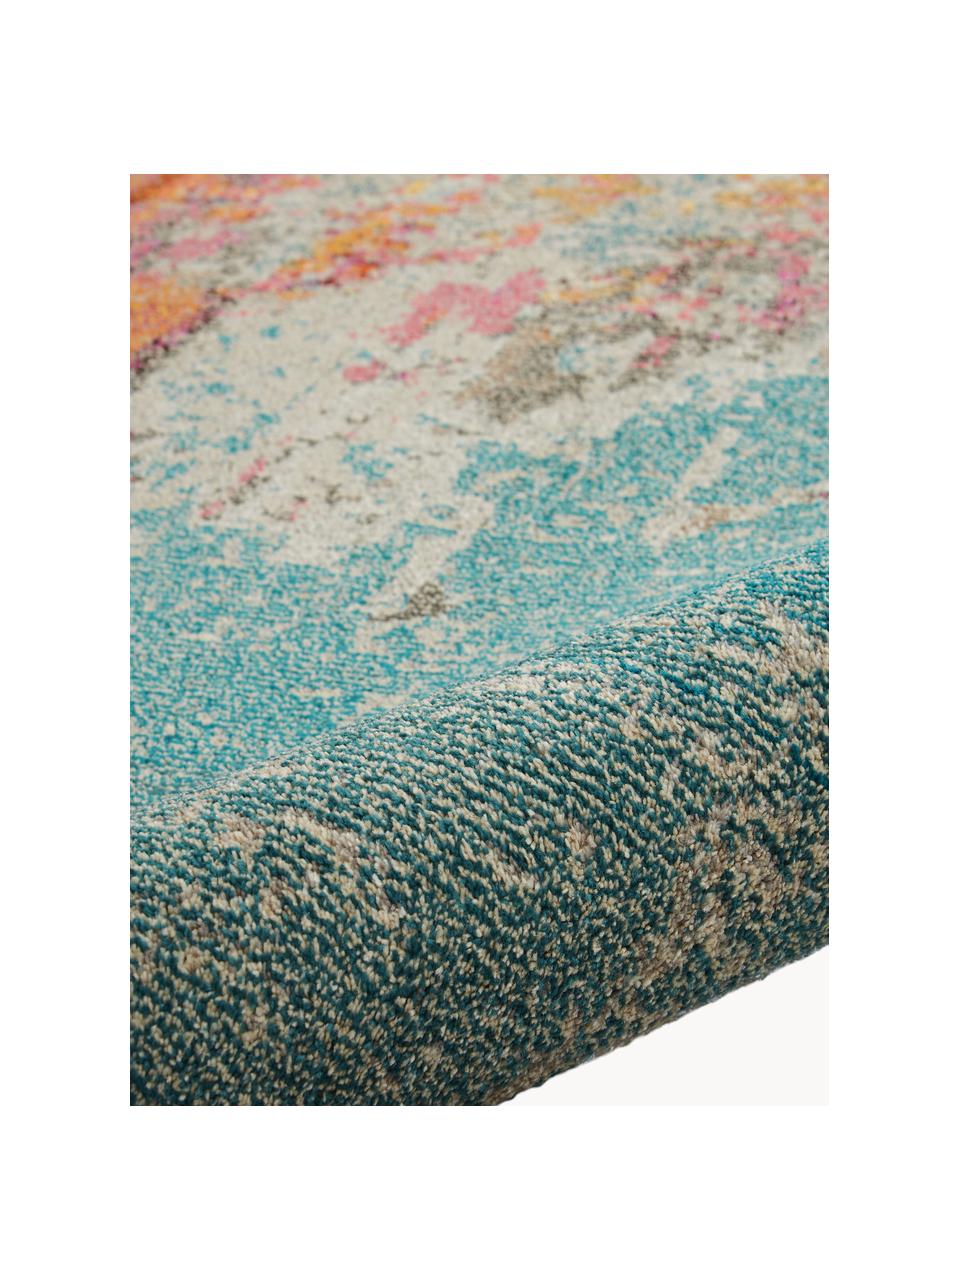 Design Niederflor-Teppich Celestial, Flor: 100% Polypropylen, Hellbeige, Bunt, B 160 x L 220 cm (Größe M)